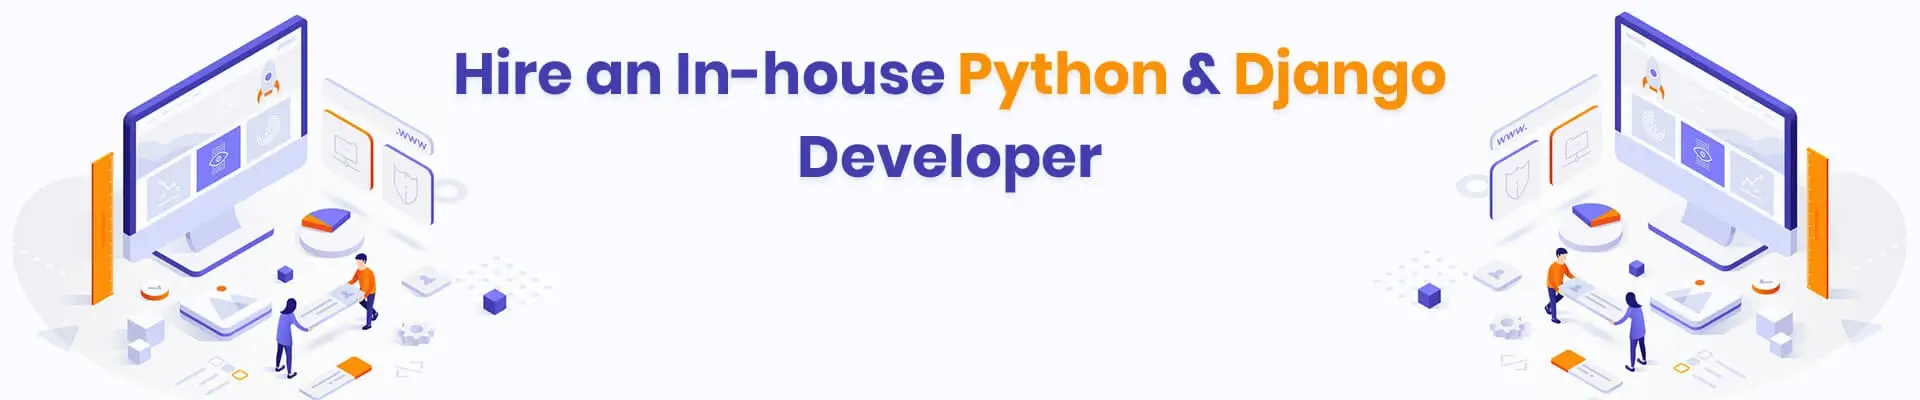 Hire an In-house Python & Django Developer [Ultimate Guide on Hiring In-house Python/Django Developers 2021-2022]